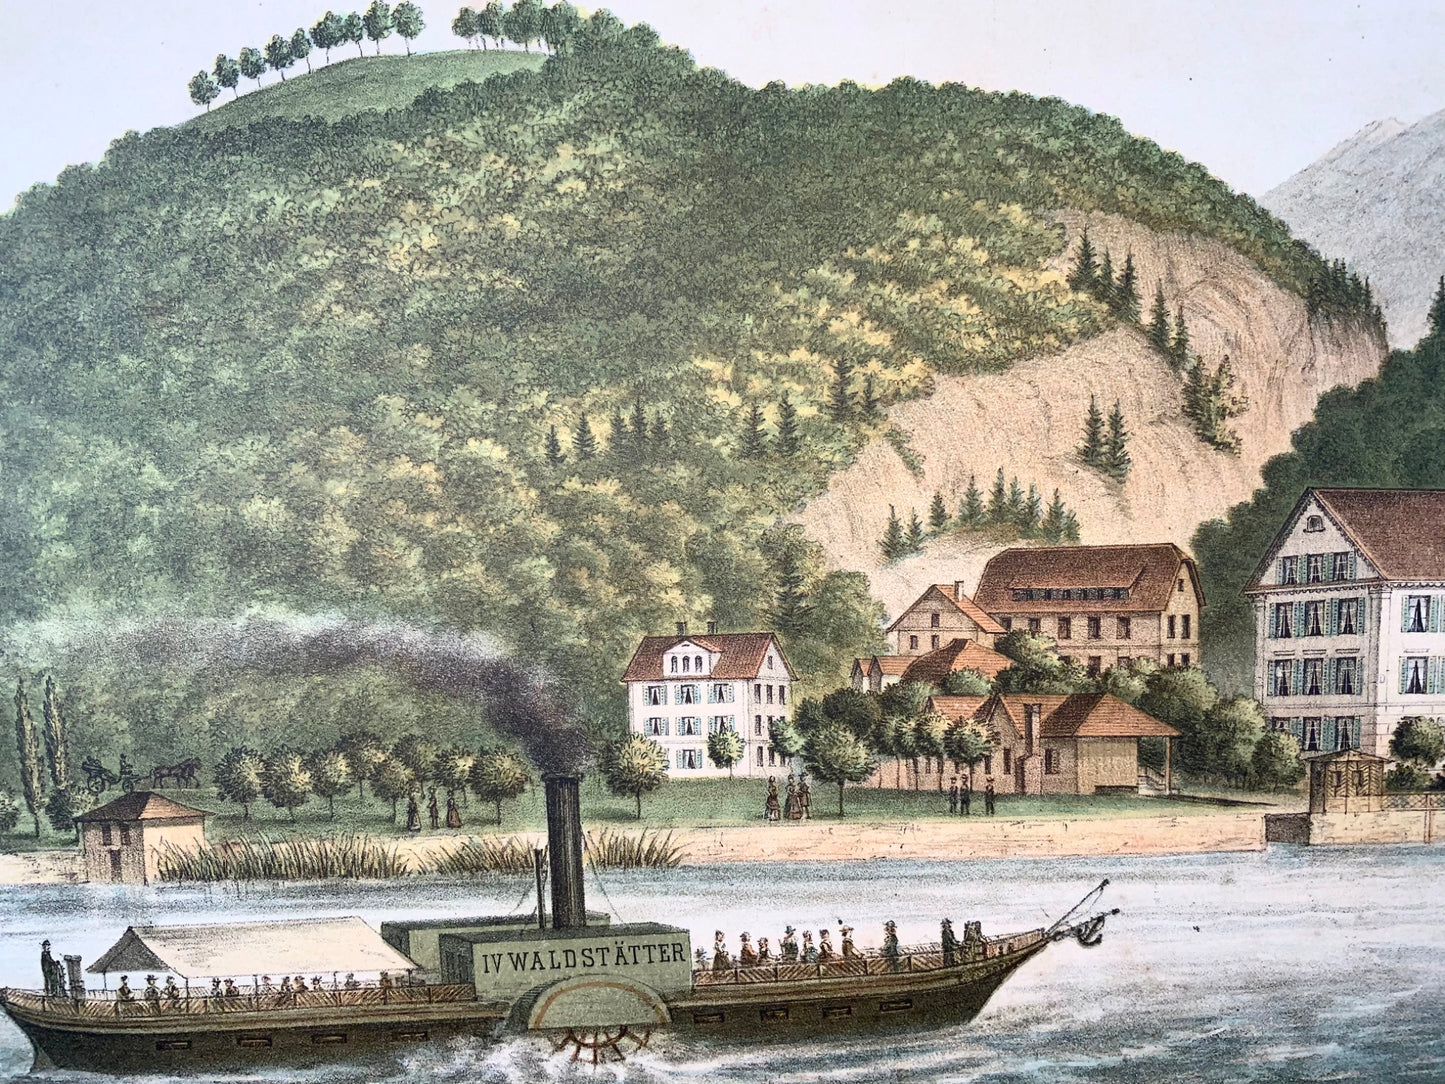 1860 ca. SWISS TRAVEL Poster 55x62 cm Nave a vapore Rotzloch Stanstadt